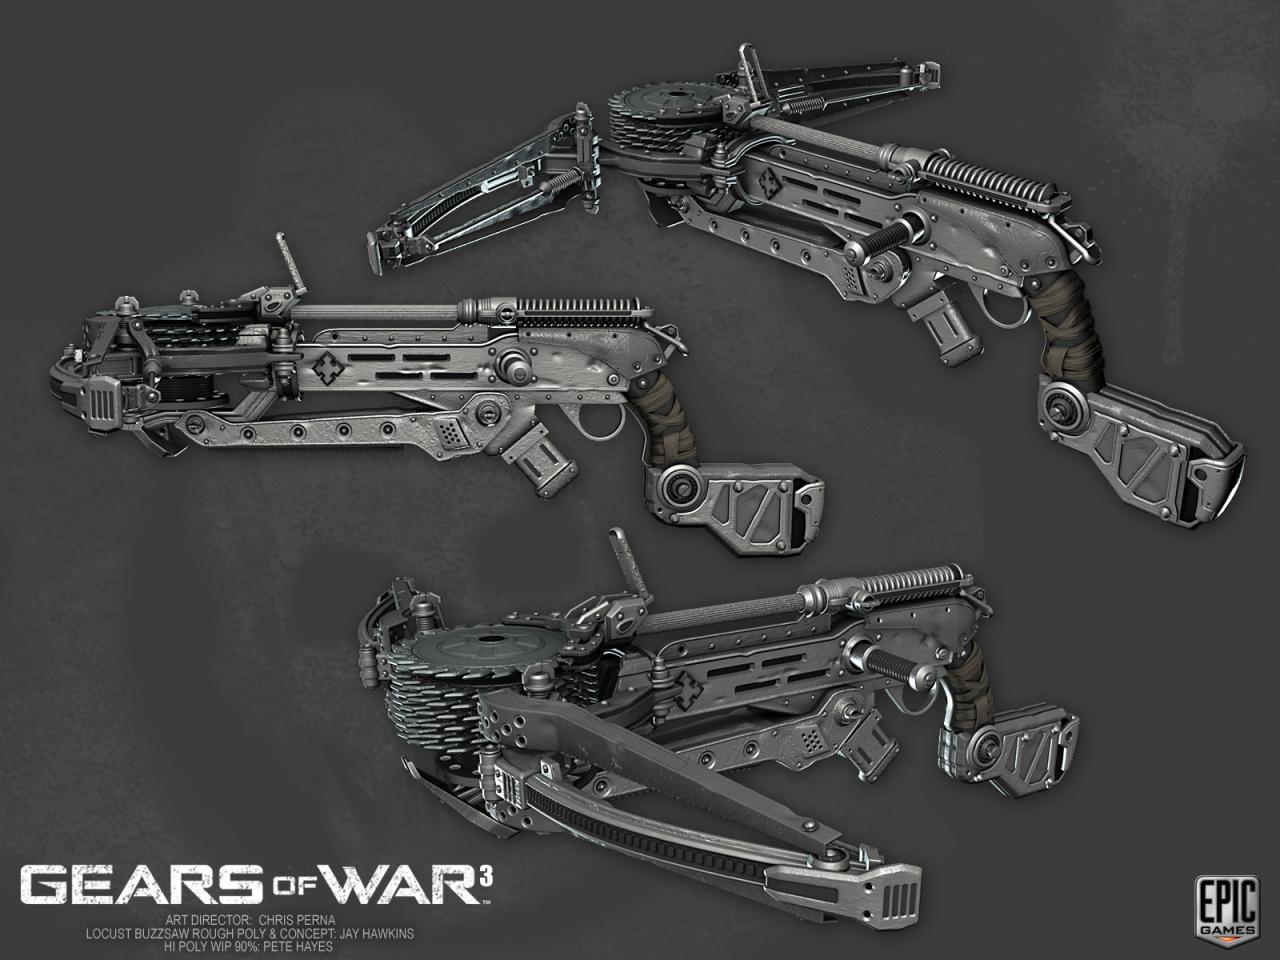 Gears of war 3 weapons